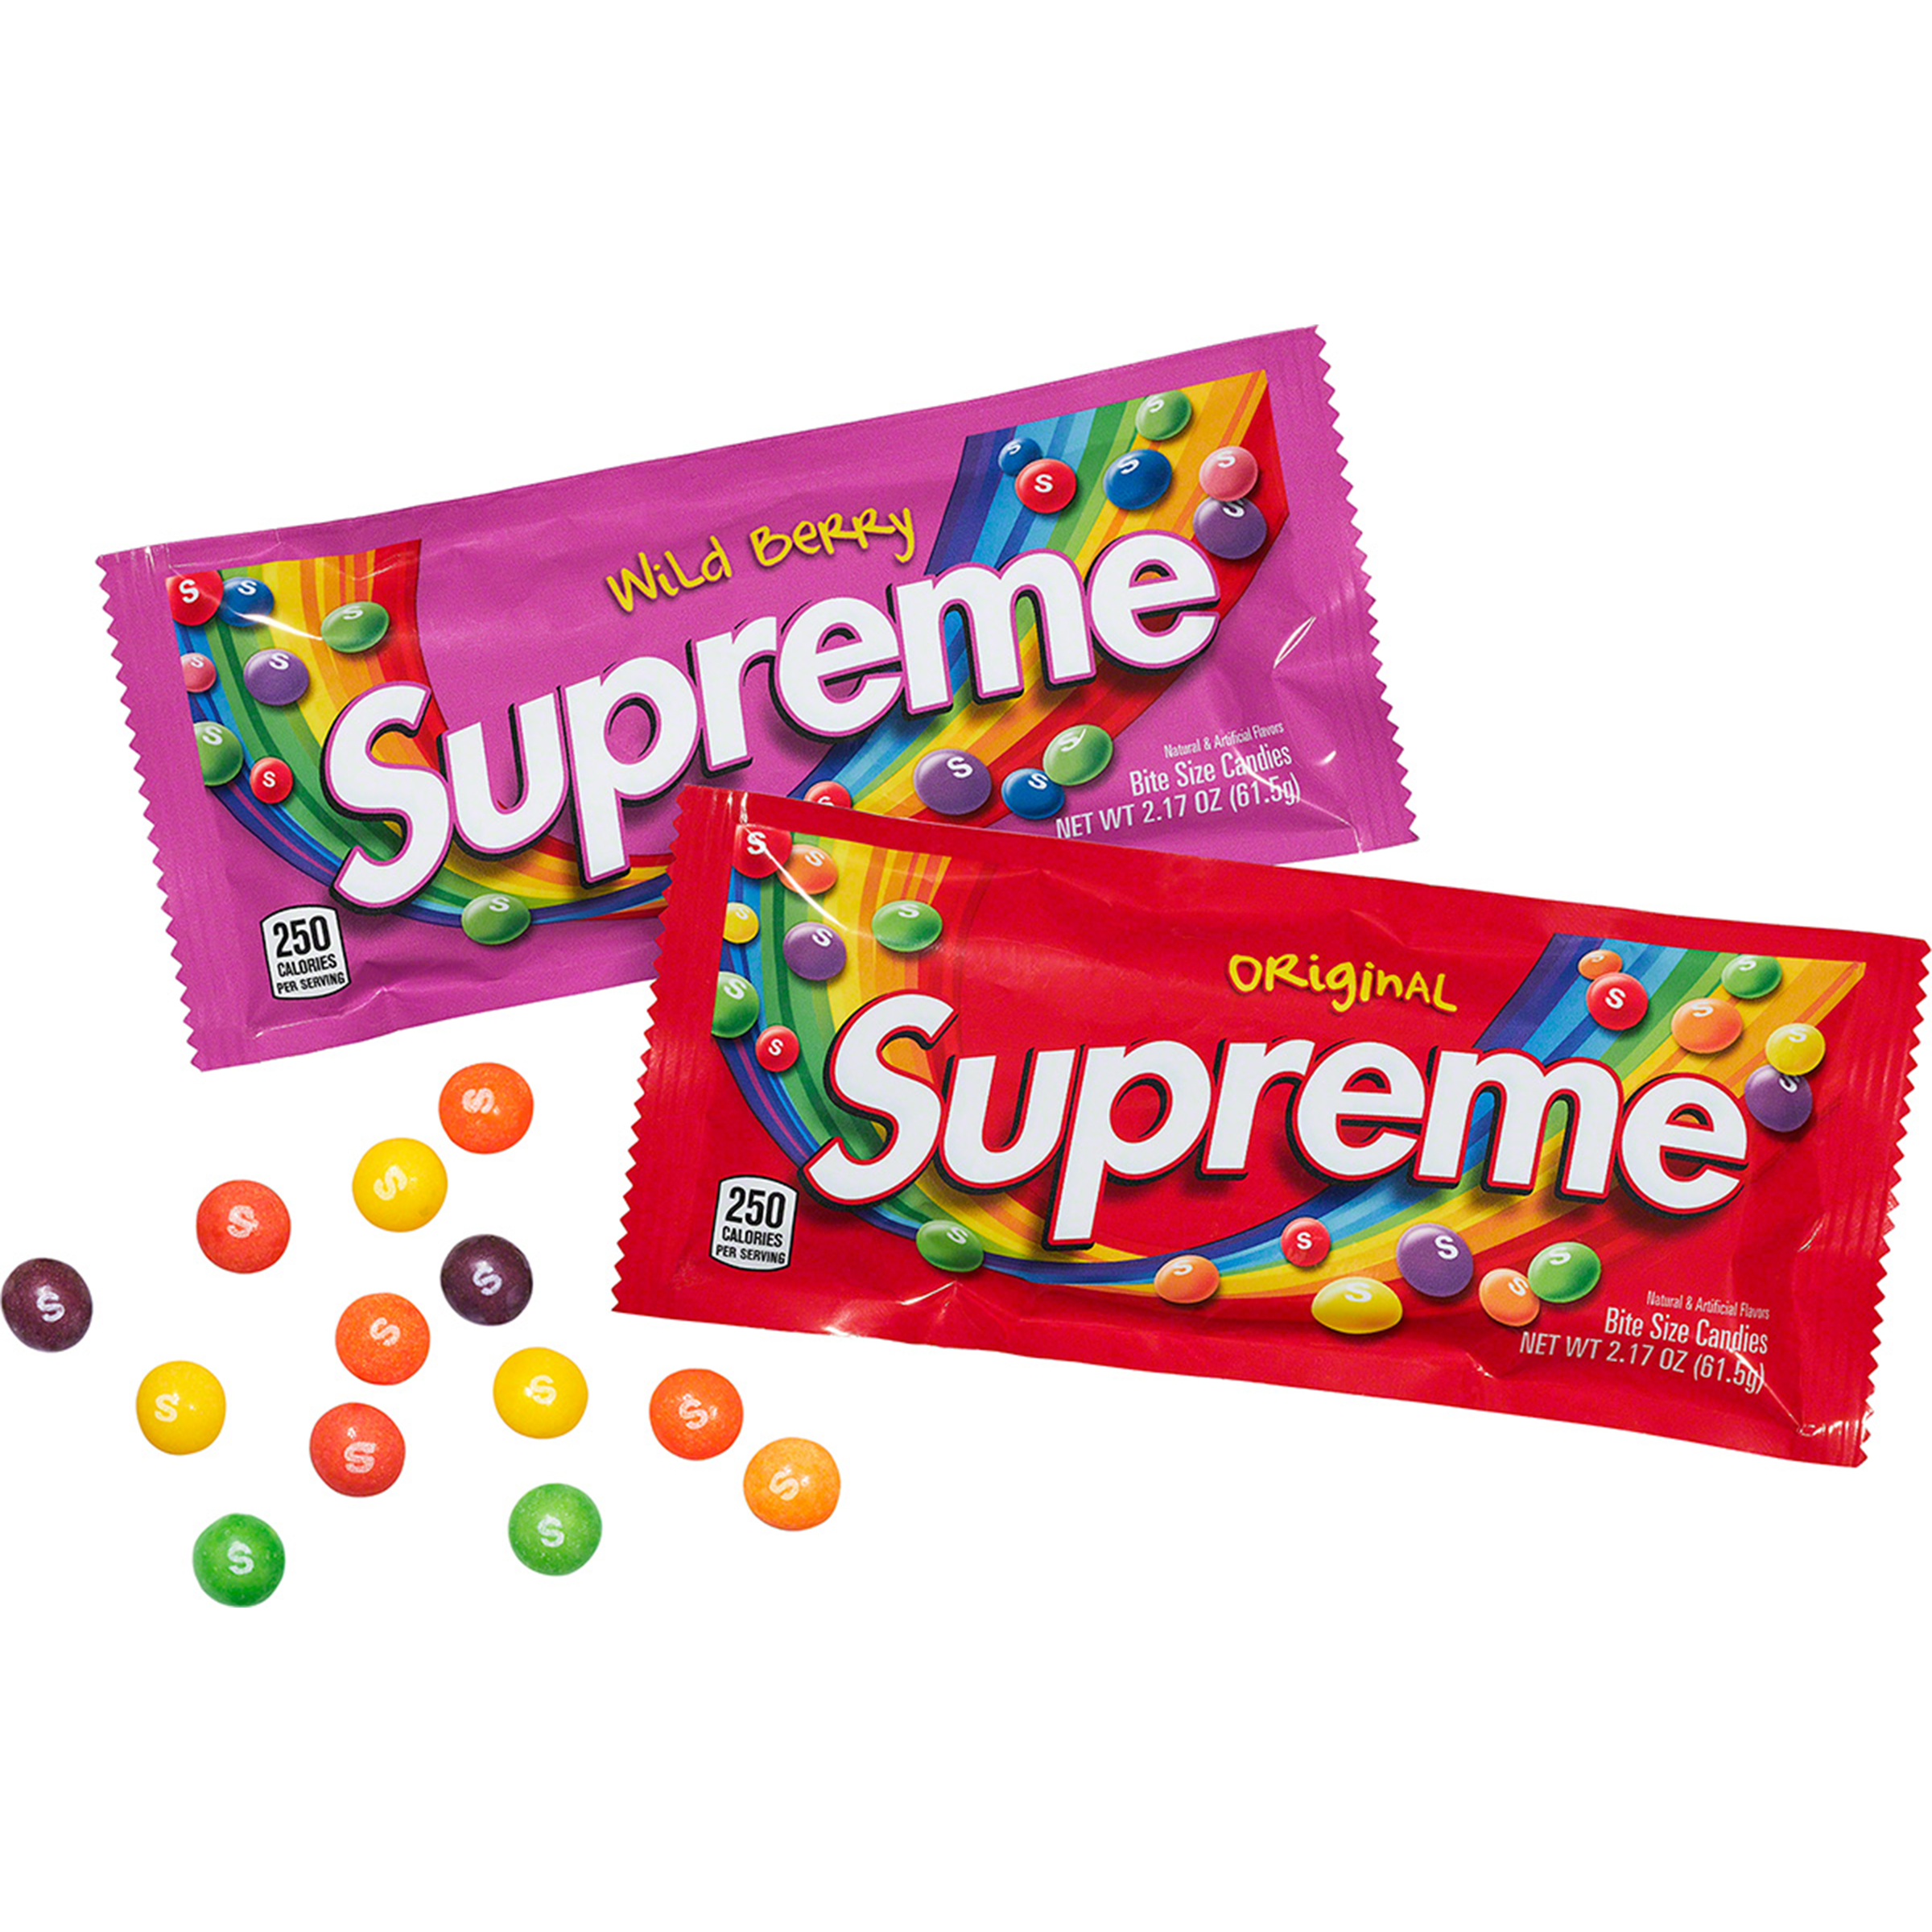 Supreme Skittles - Orignal